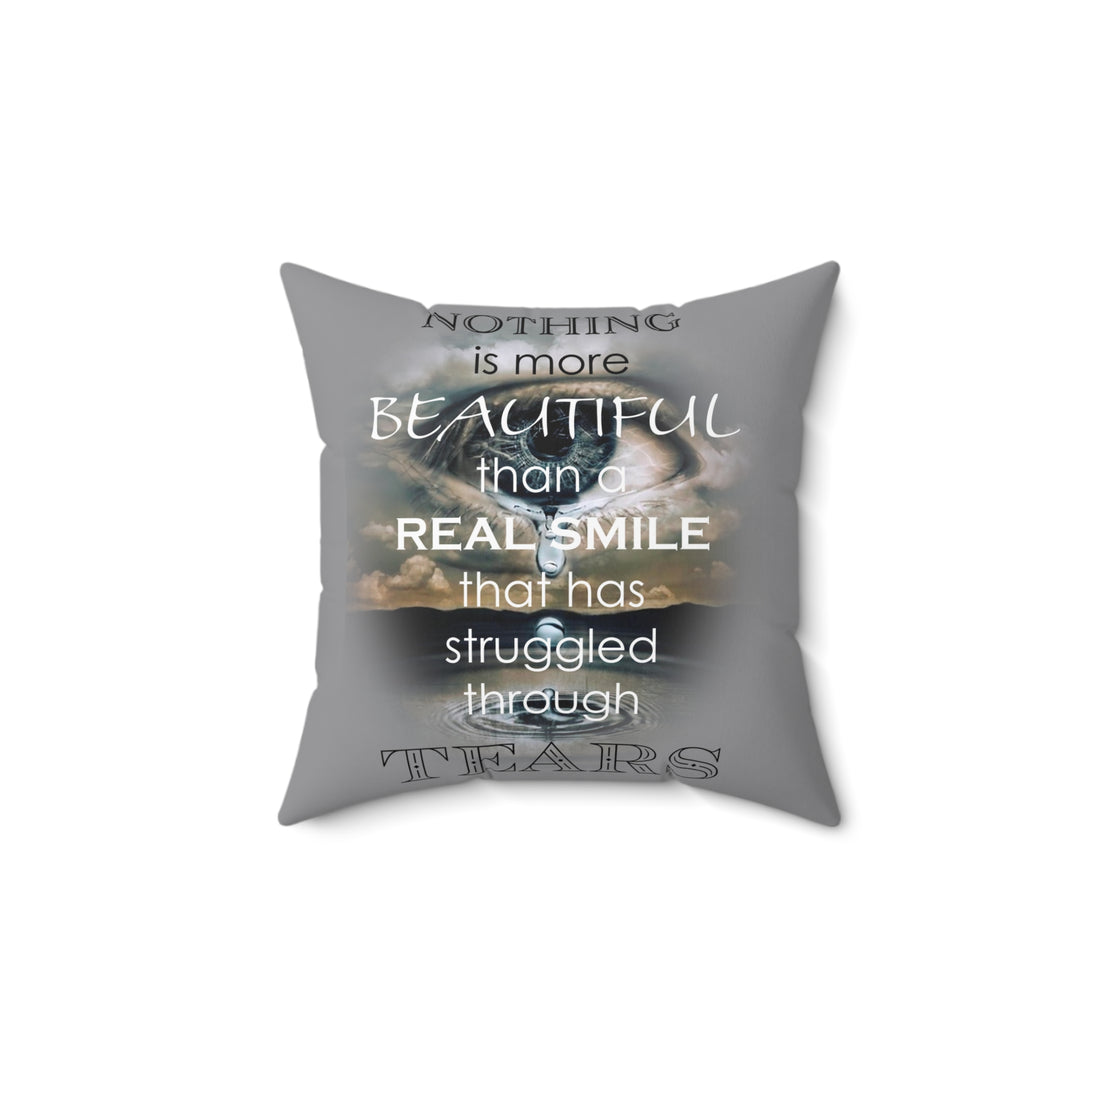 Nothing More Beautiful - Spun Polyester Square Pillow